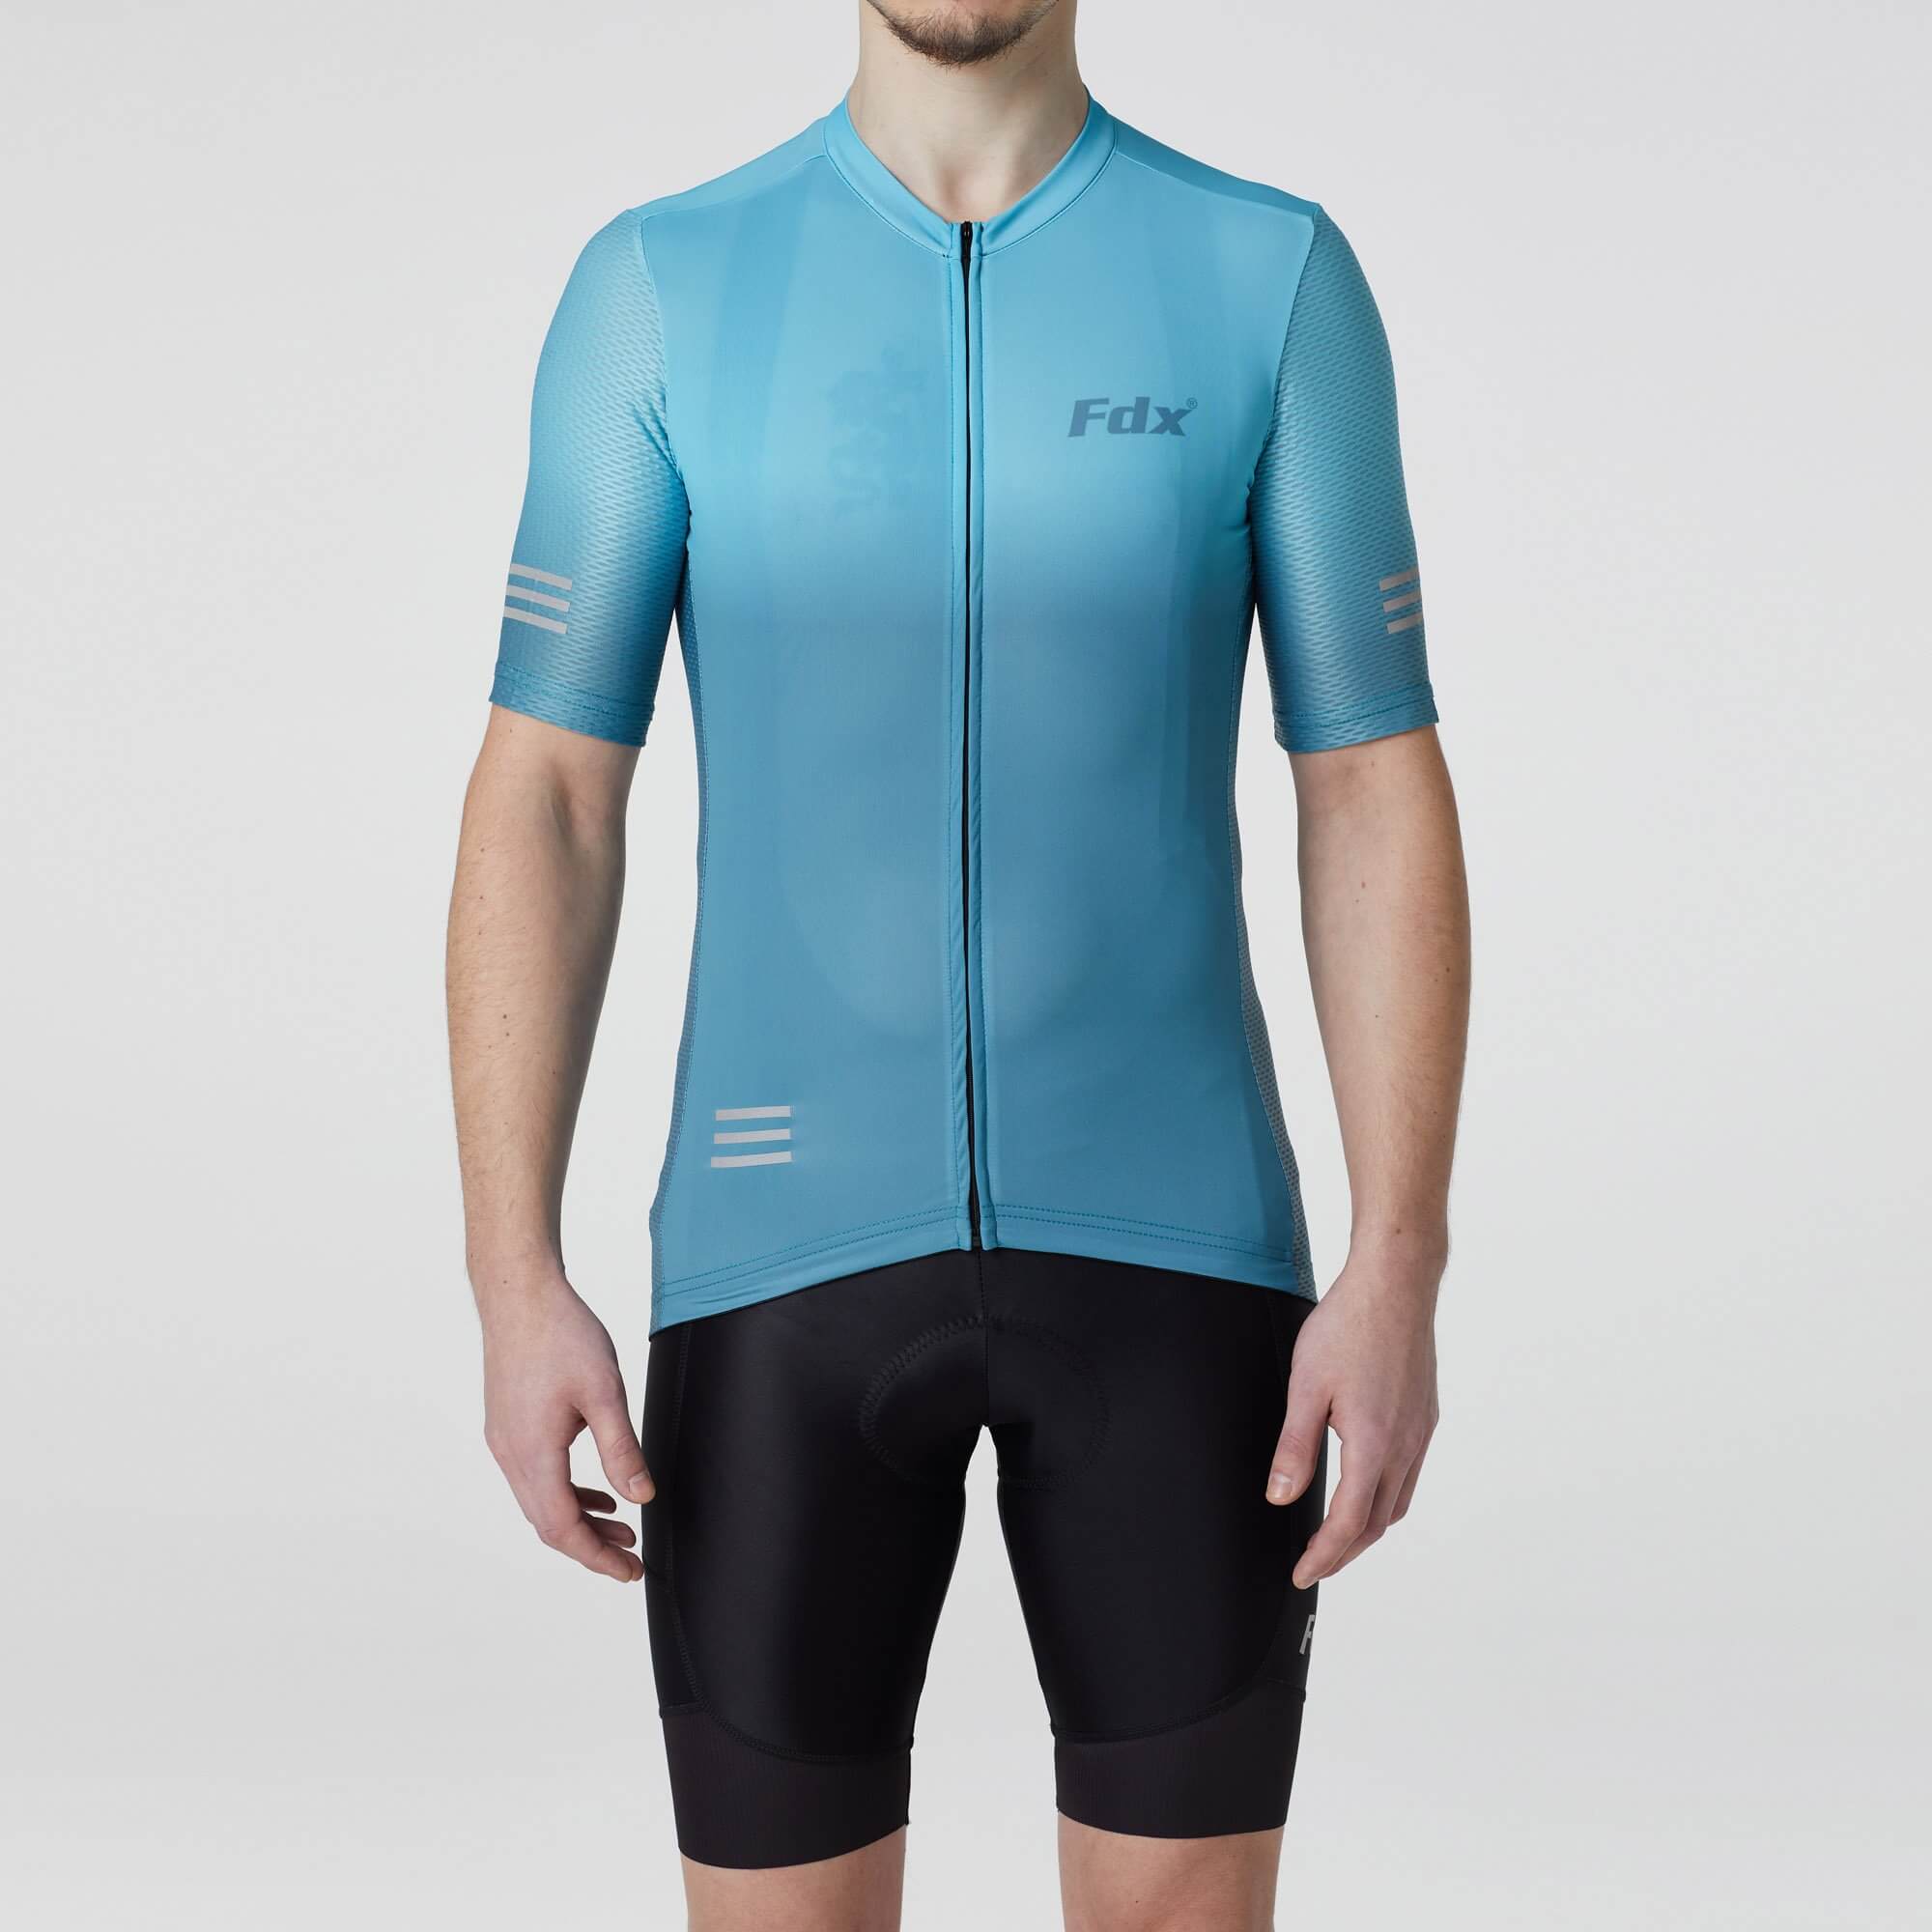 Fdx Mens Blue Half Sleeve Summer Cycling Jersey Breathable lightweight Fabric, Bib Short Hi Viz Reflectors & Full Zipper Cycling Gear Australia